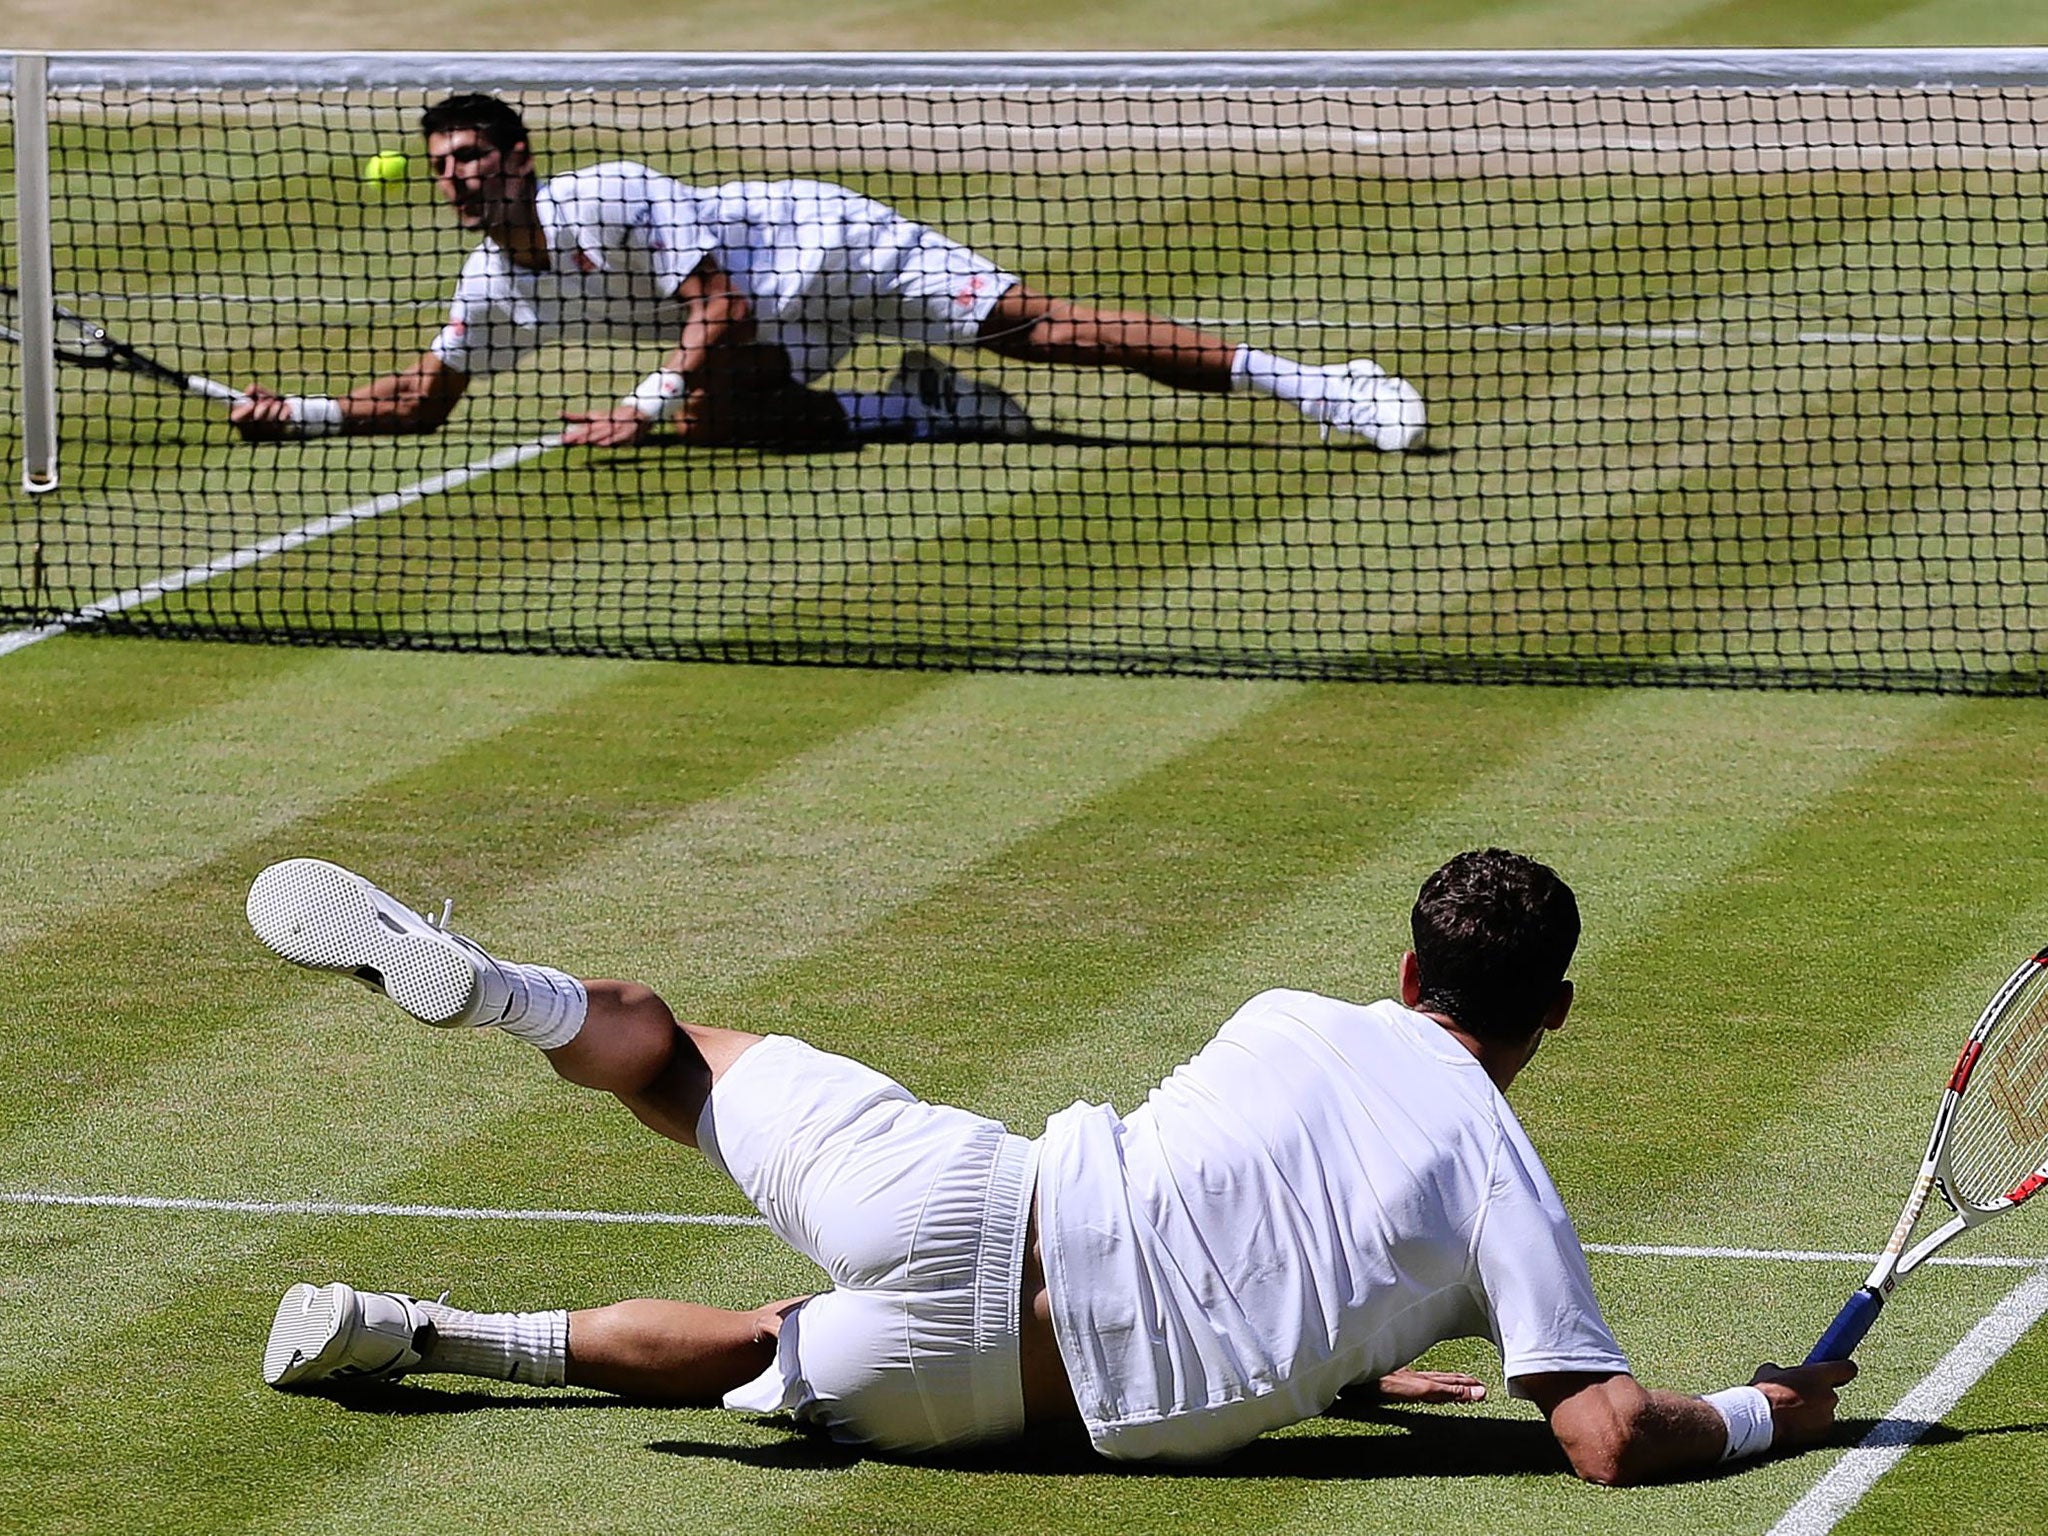 Novak Djokovic (top) and Grigor Dimitrov both slip on the worn surface of Centre Court